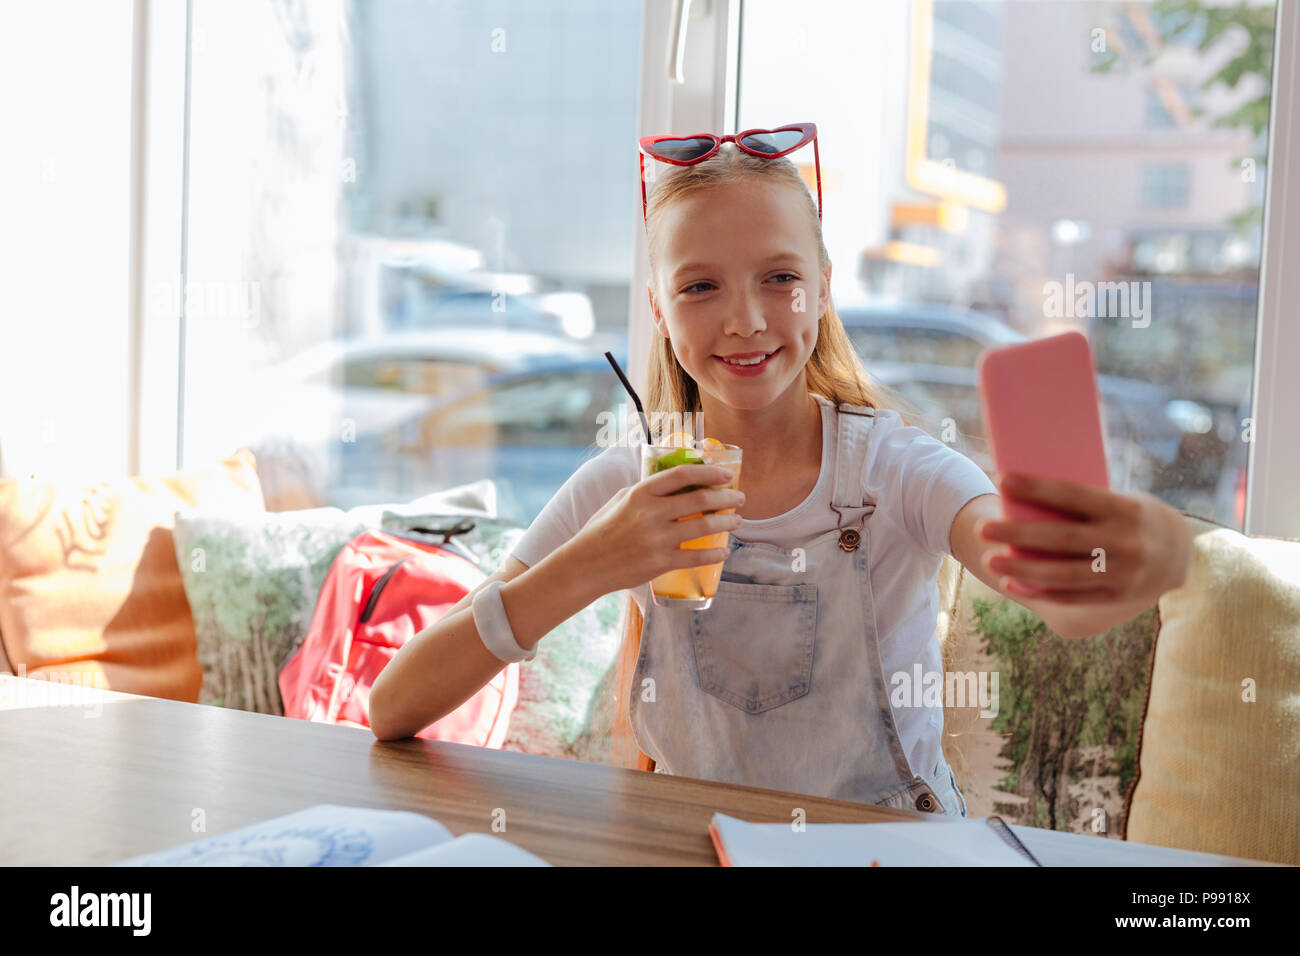 Modern teenager smiling while making selfie Stock Photo